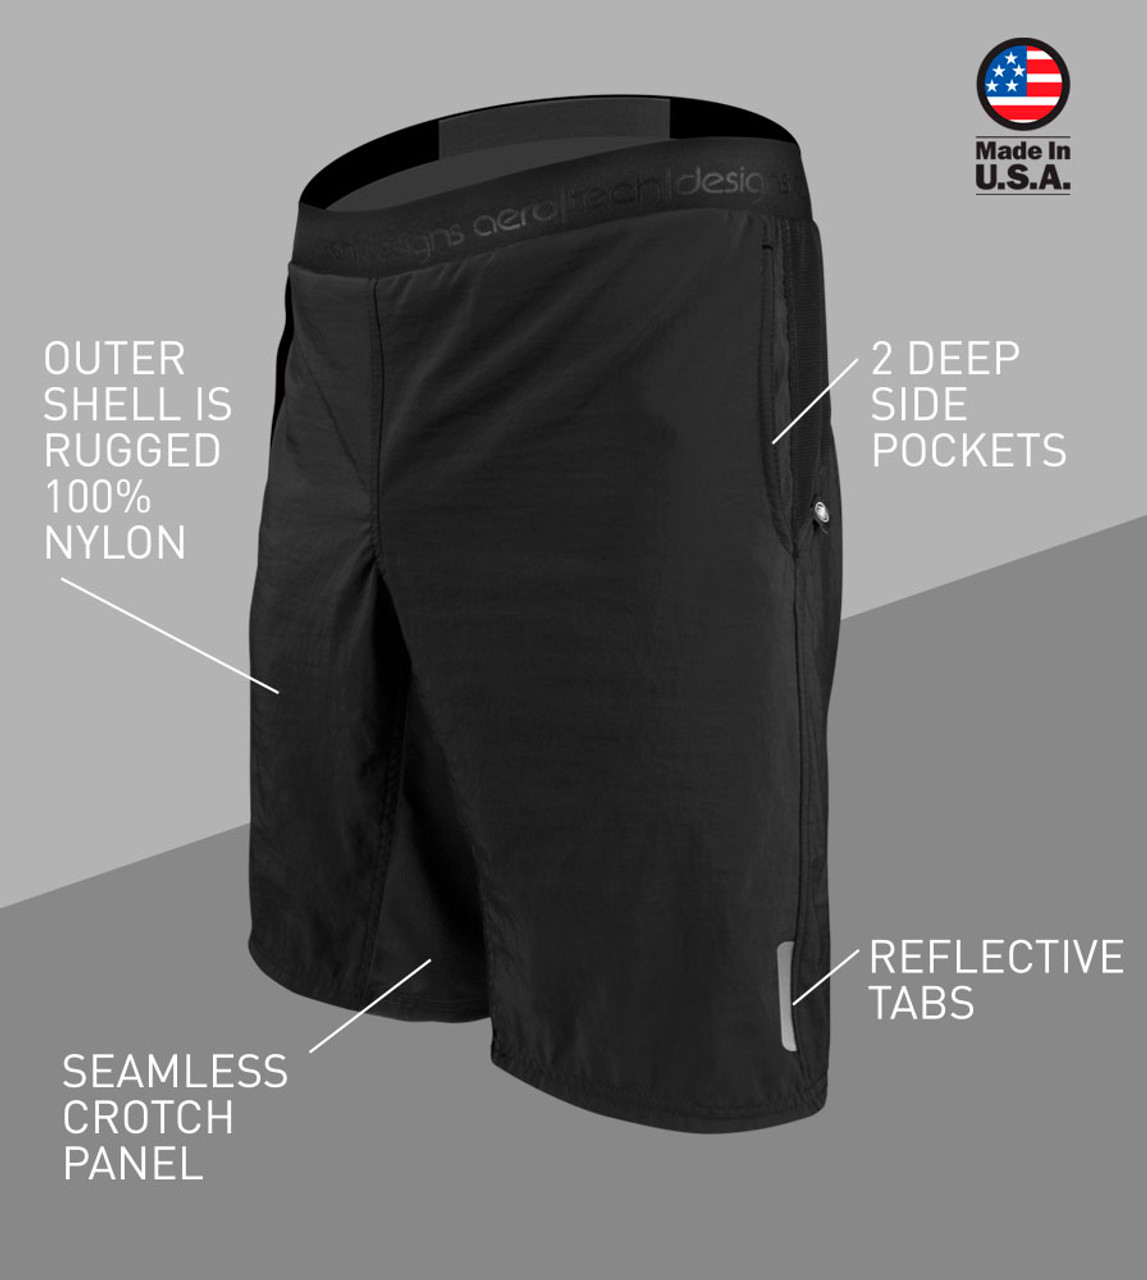 Men's USA MTB PADDED Mountain Bike Shorts with Shorter 8